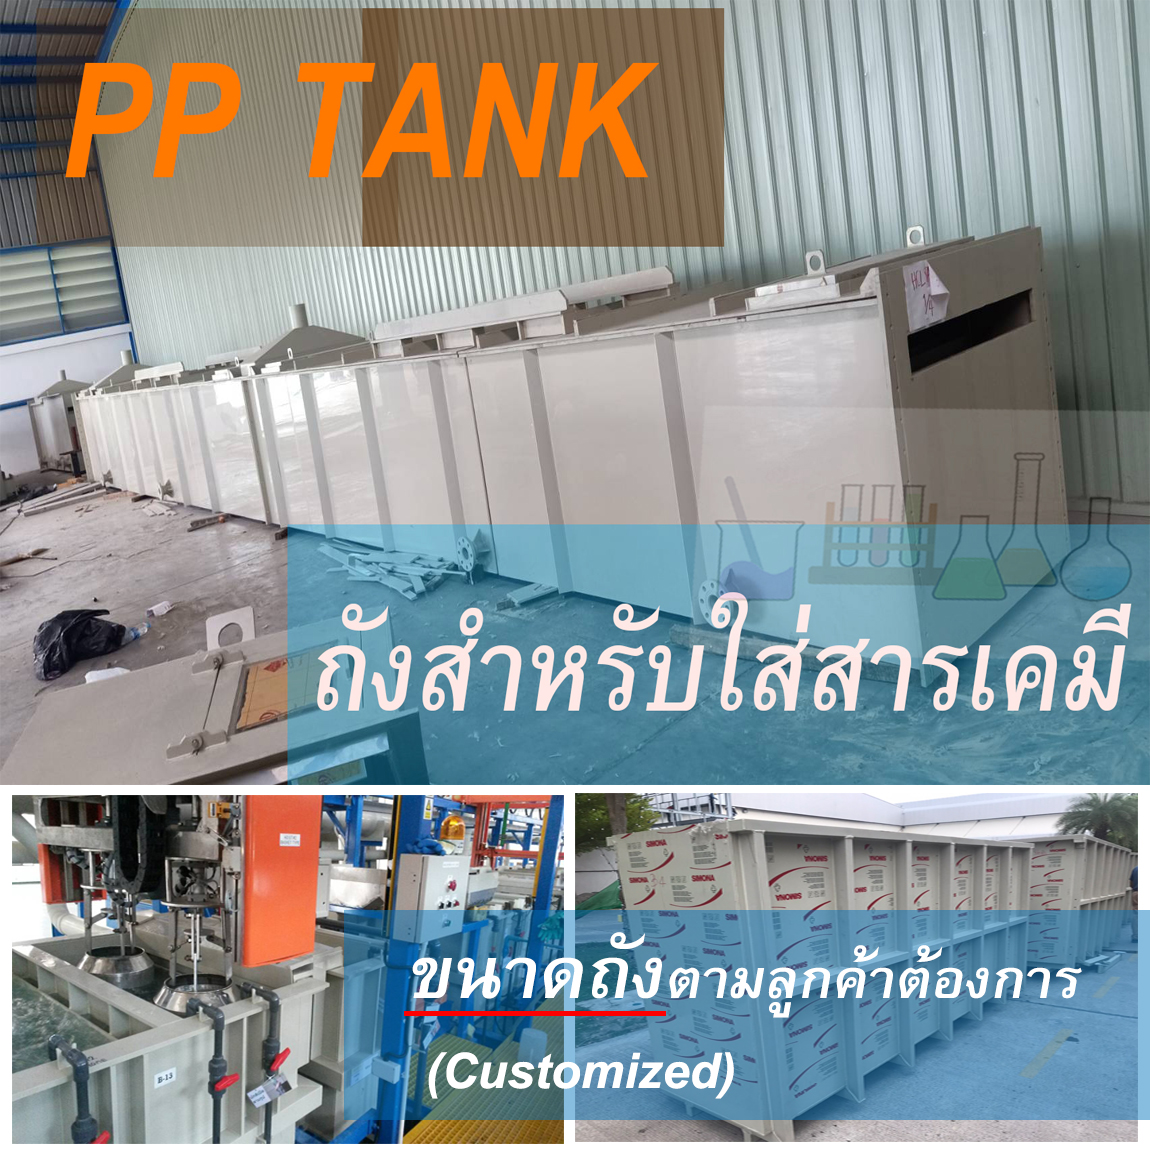 PP Tank